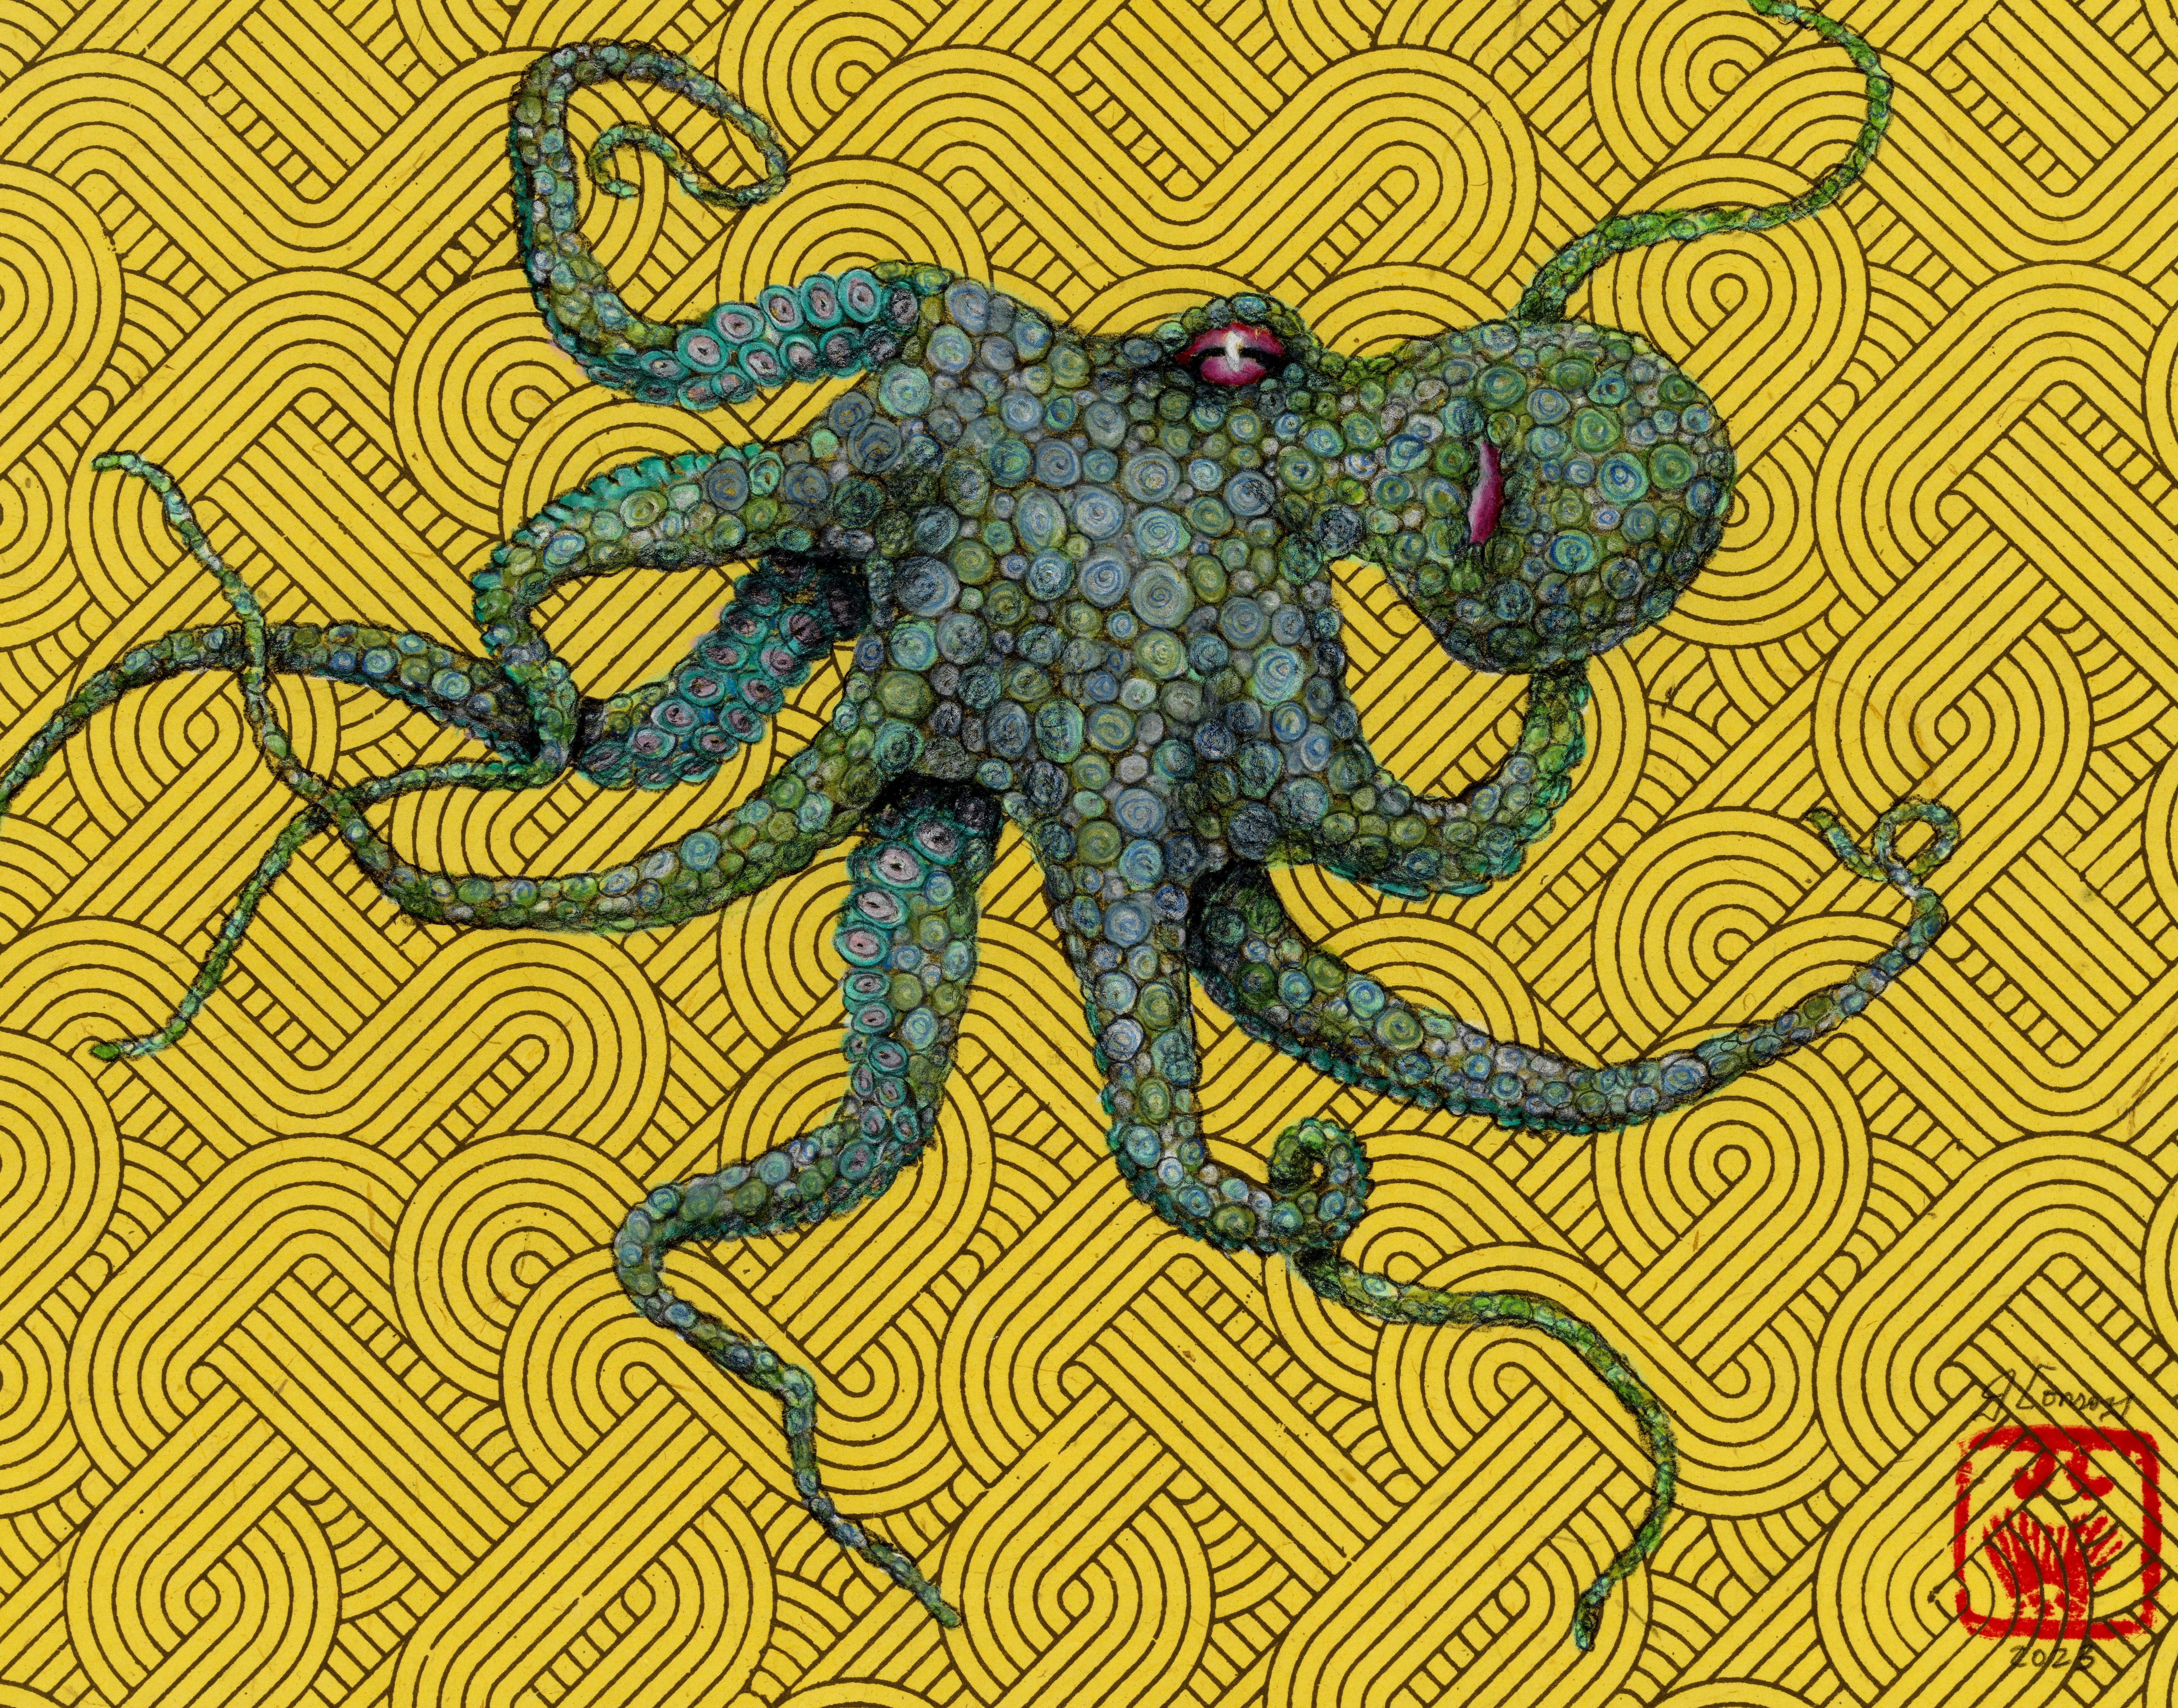 Boucle d'or - Goblin vert - Gyotaku Style Sumi Ink Painting of an Octopus (peinture à l'encre Sumi d'une pieuvre) - Art de Jeff Conroy